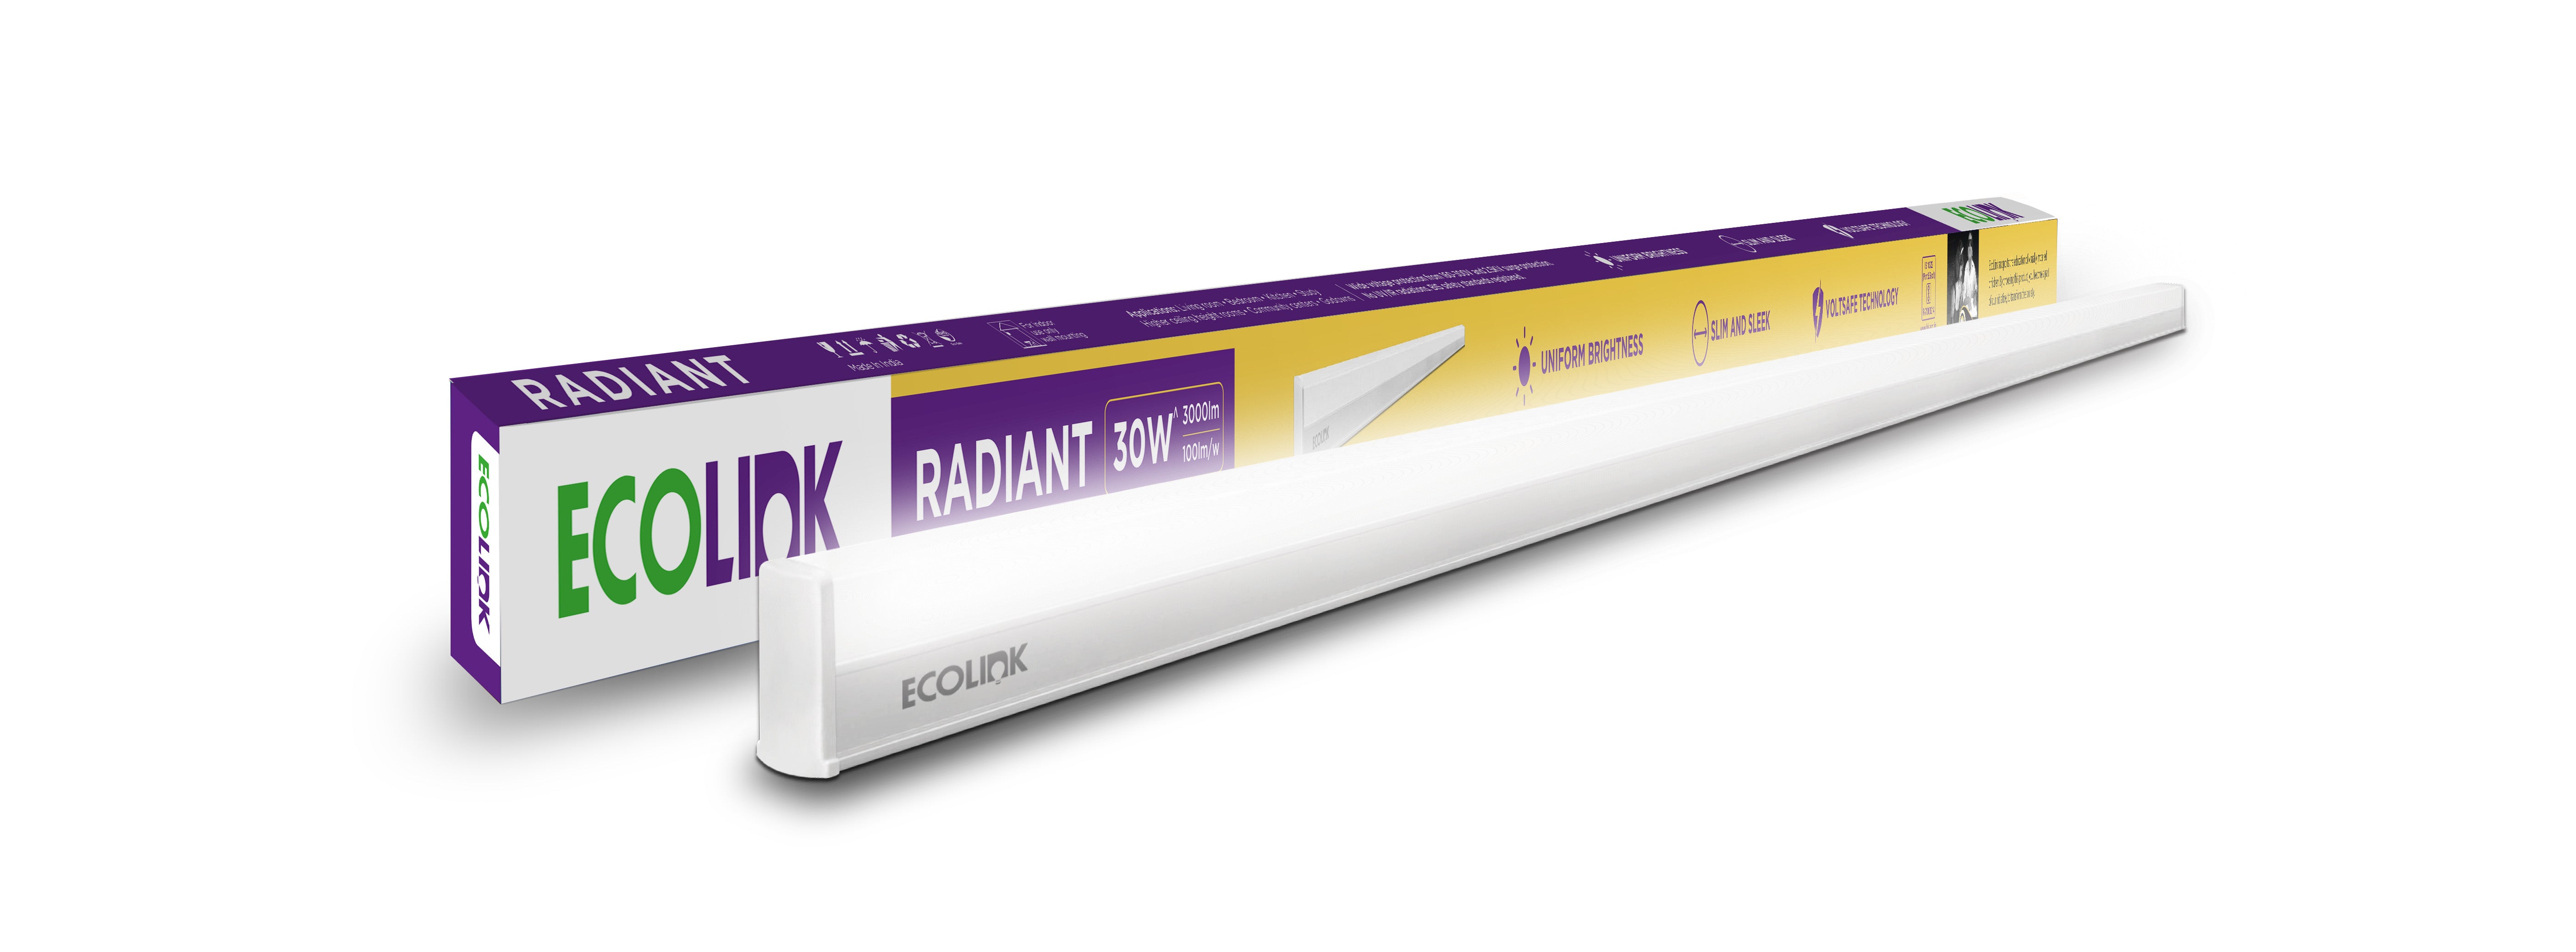 EcoLink Radiant LED Tube light